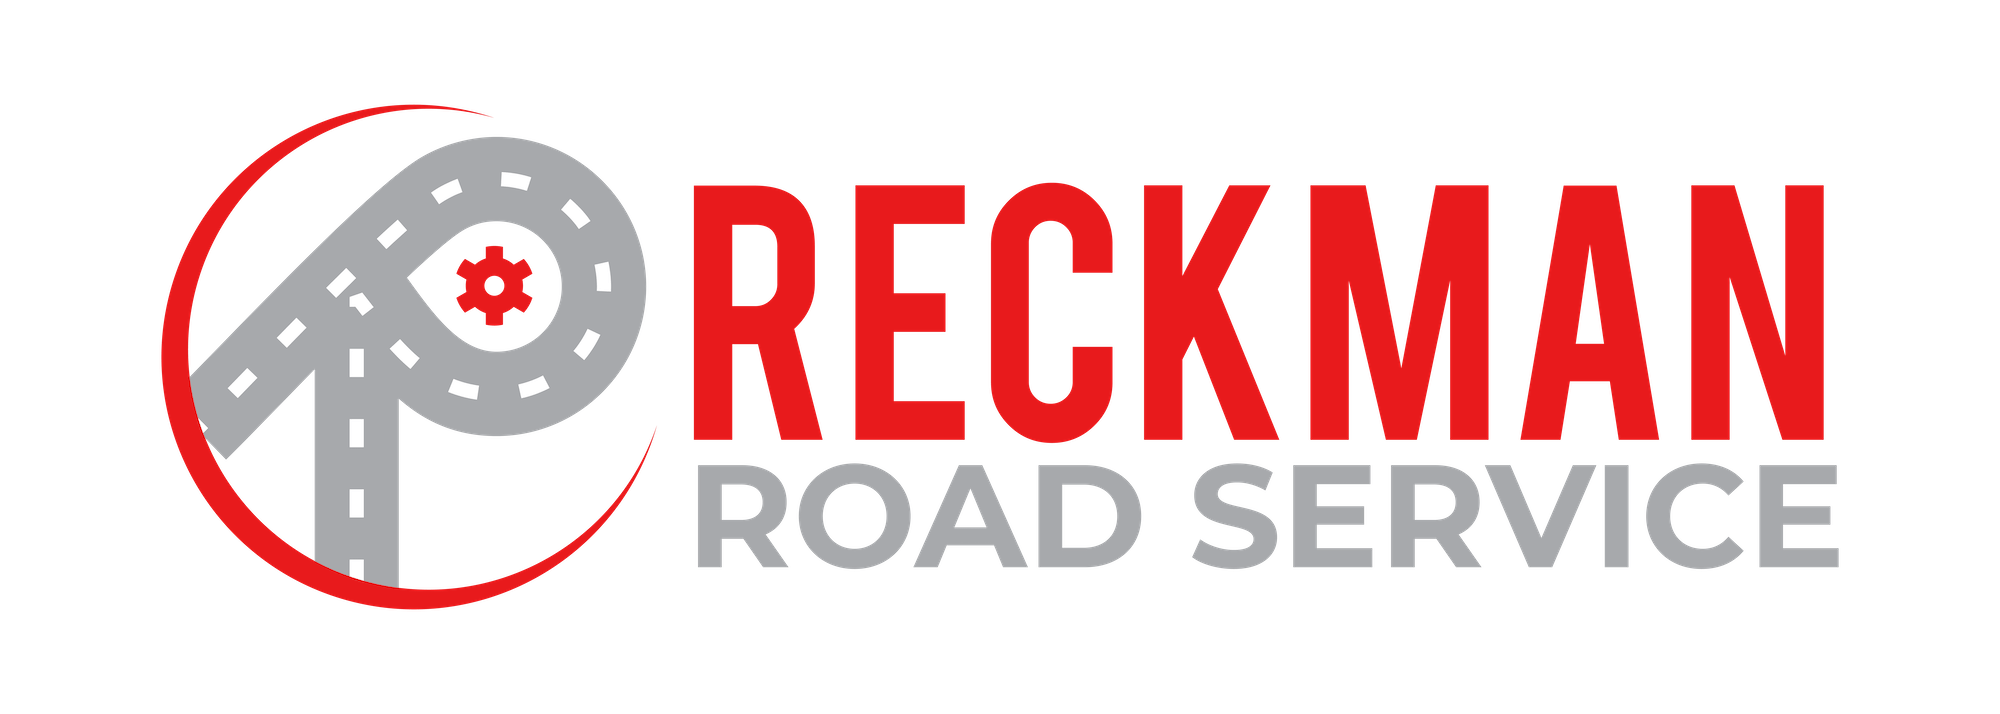 Logo Design Nisatutucu Reckmanroadservice